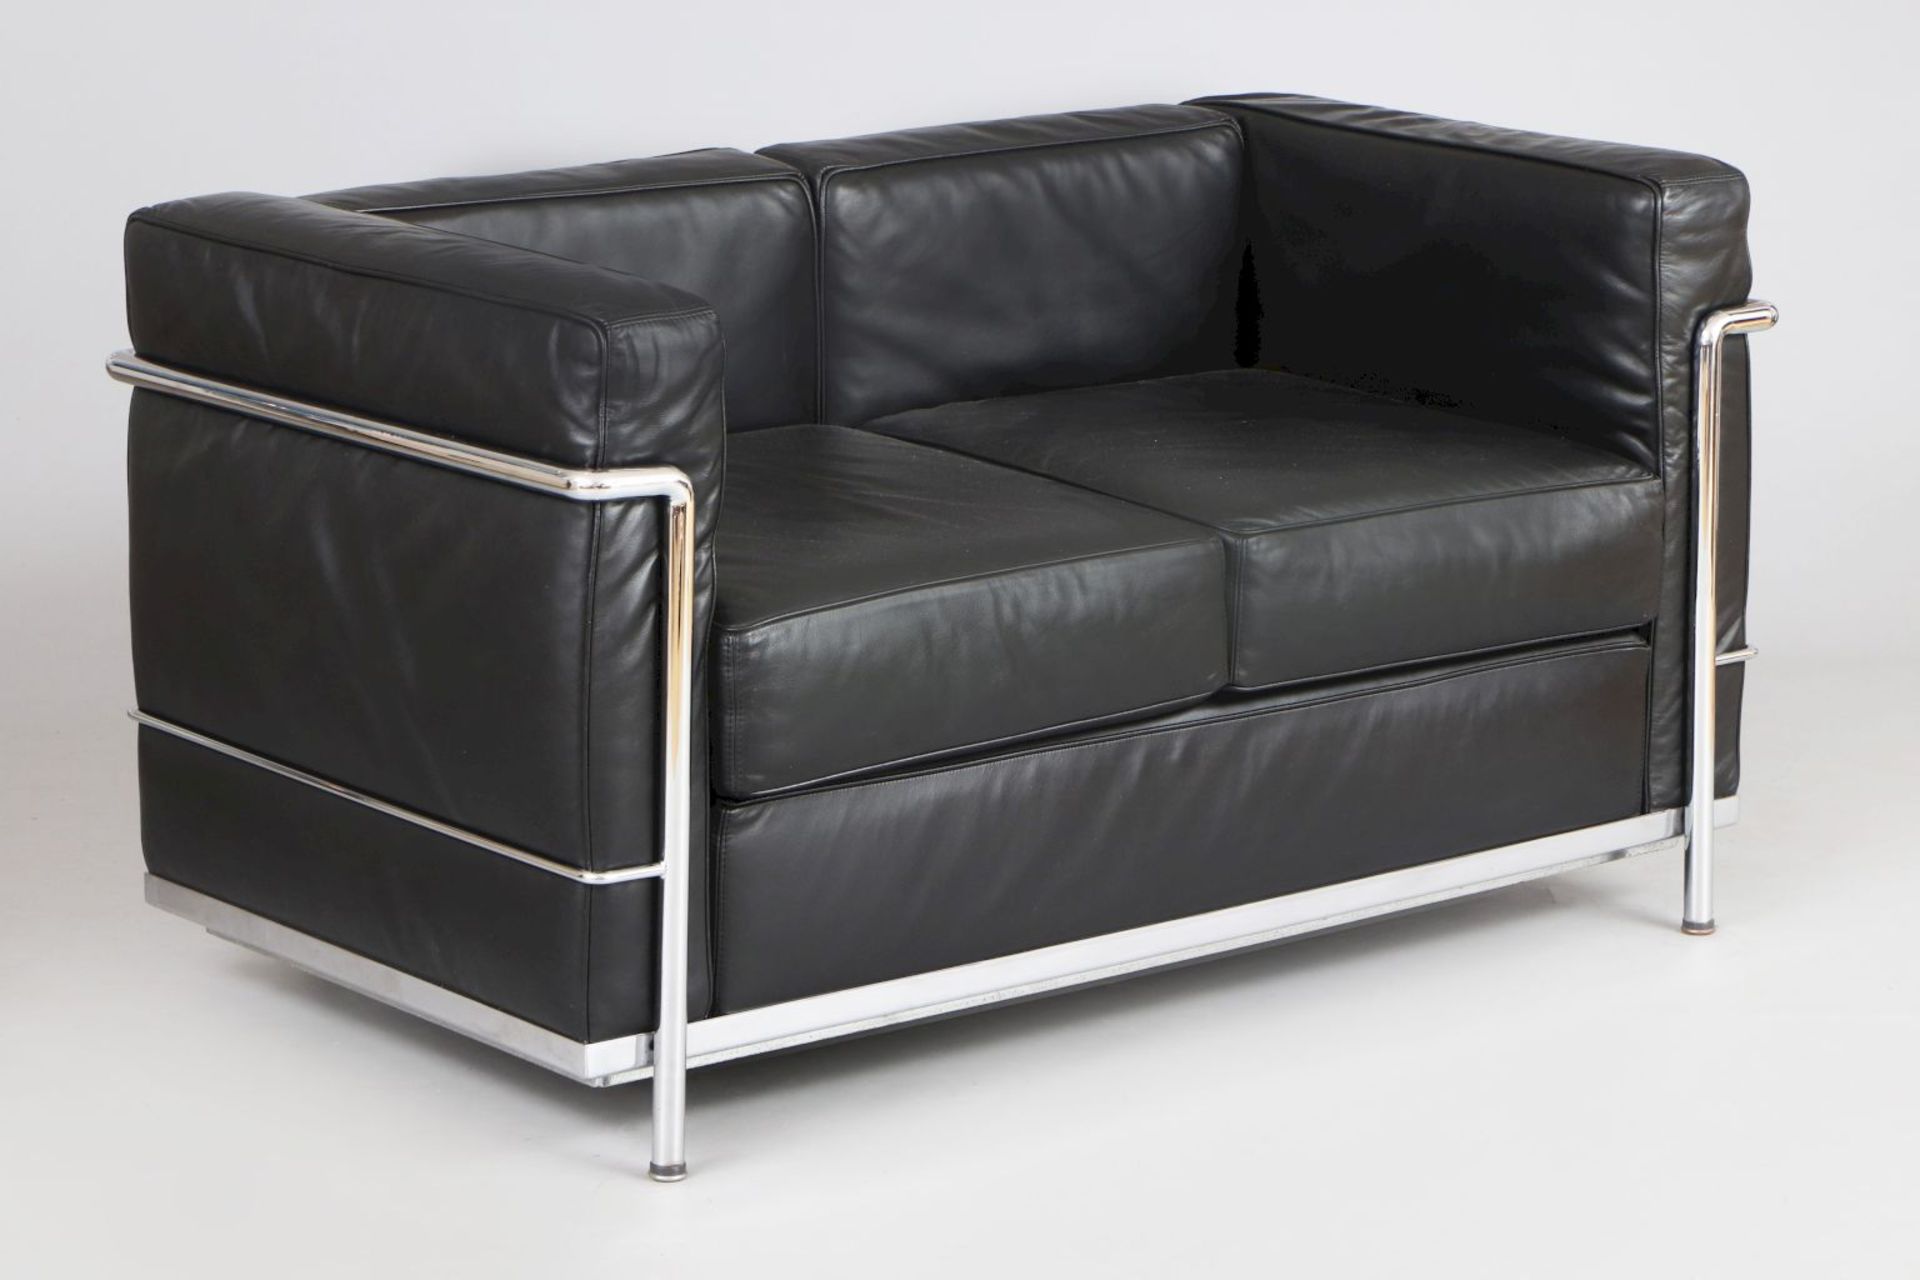 Sofa im Bauhaus-Stil2-sitzer, eckiger Rahmen aus verchromtem Stahlrohr, schwarz belederte Sitz- - Image 2 of 5